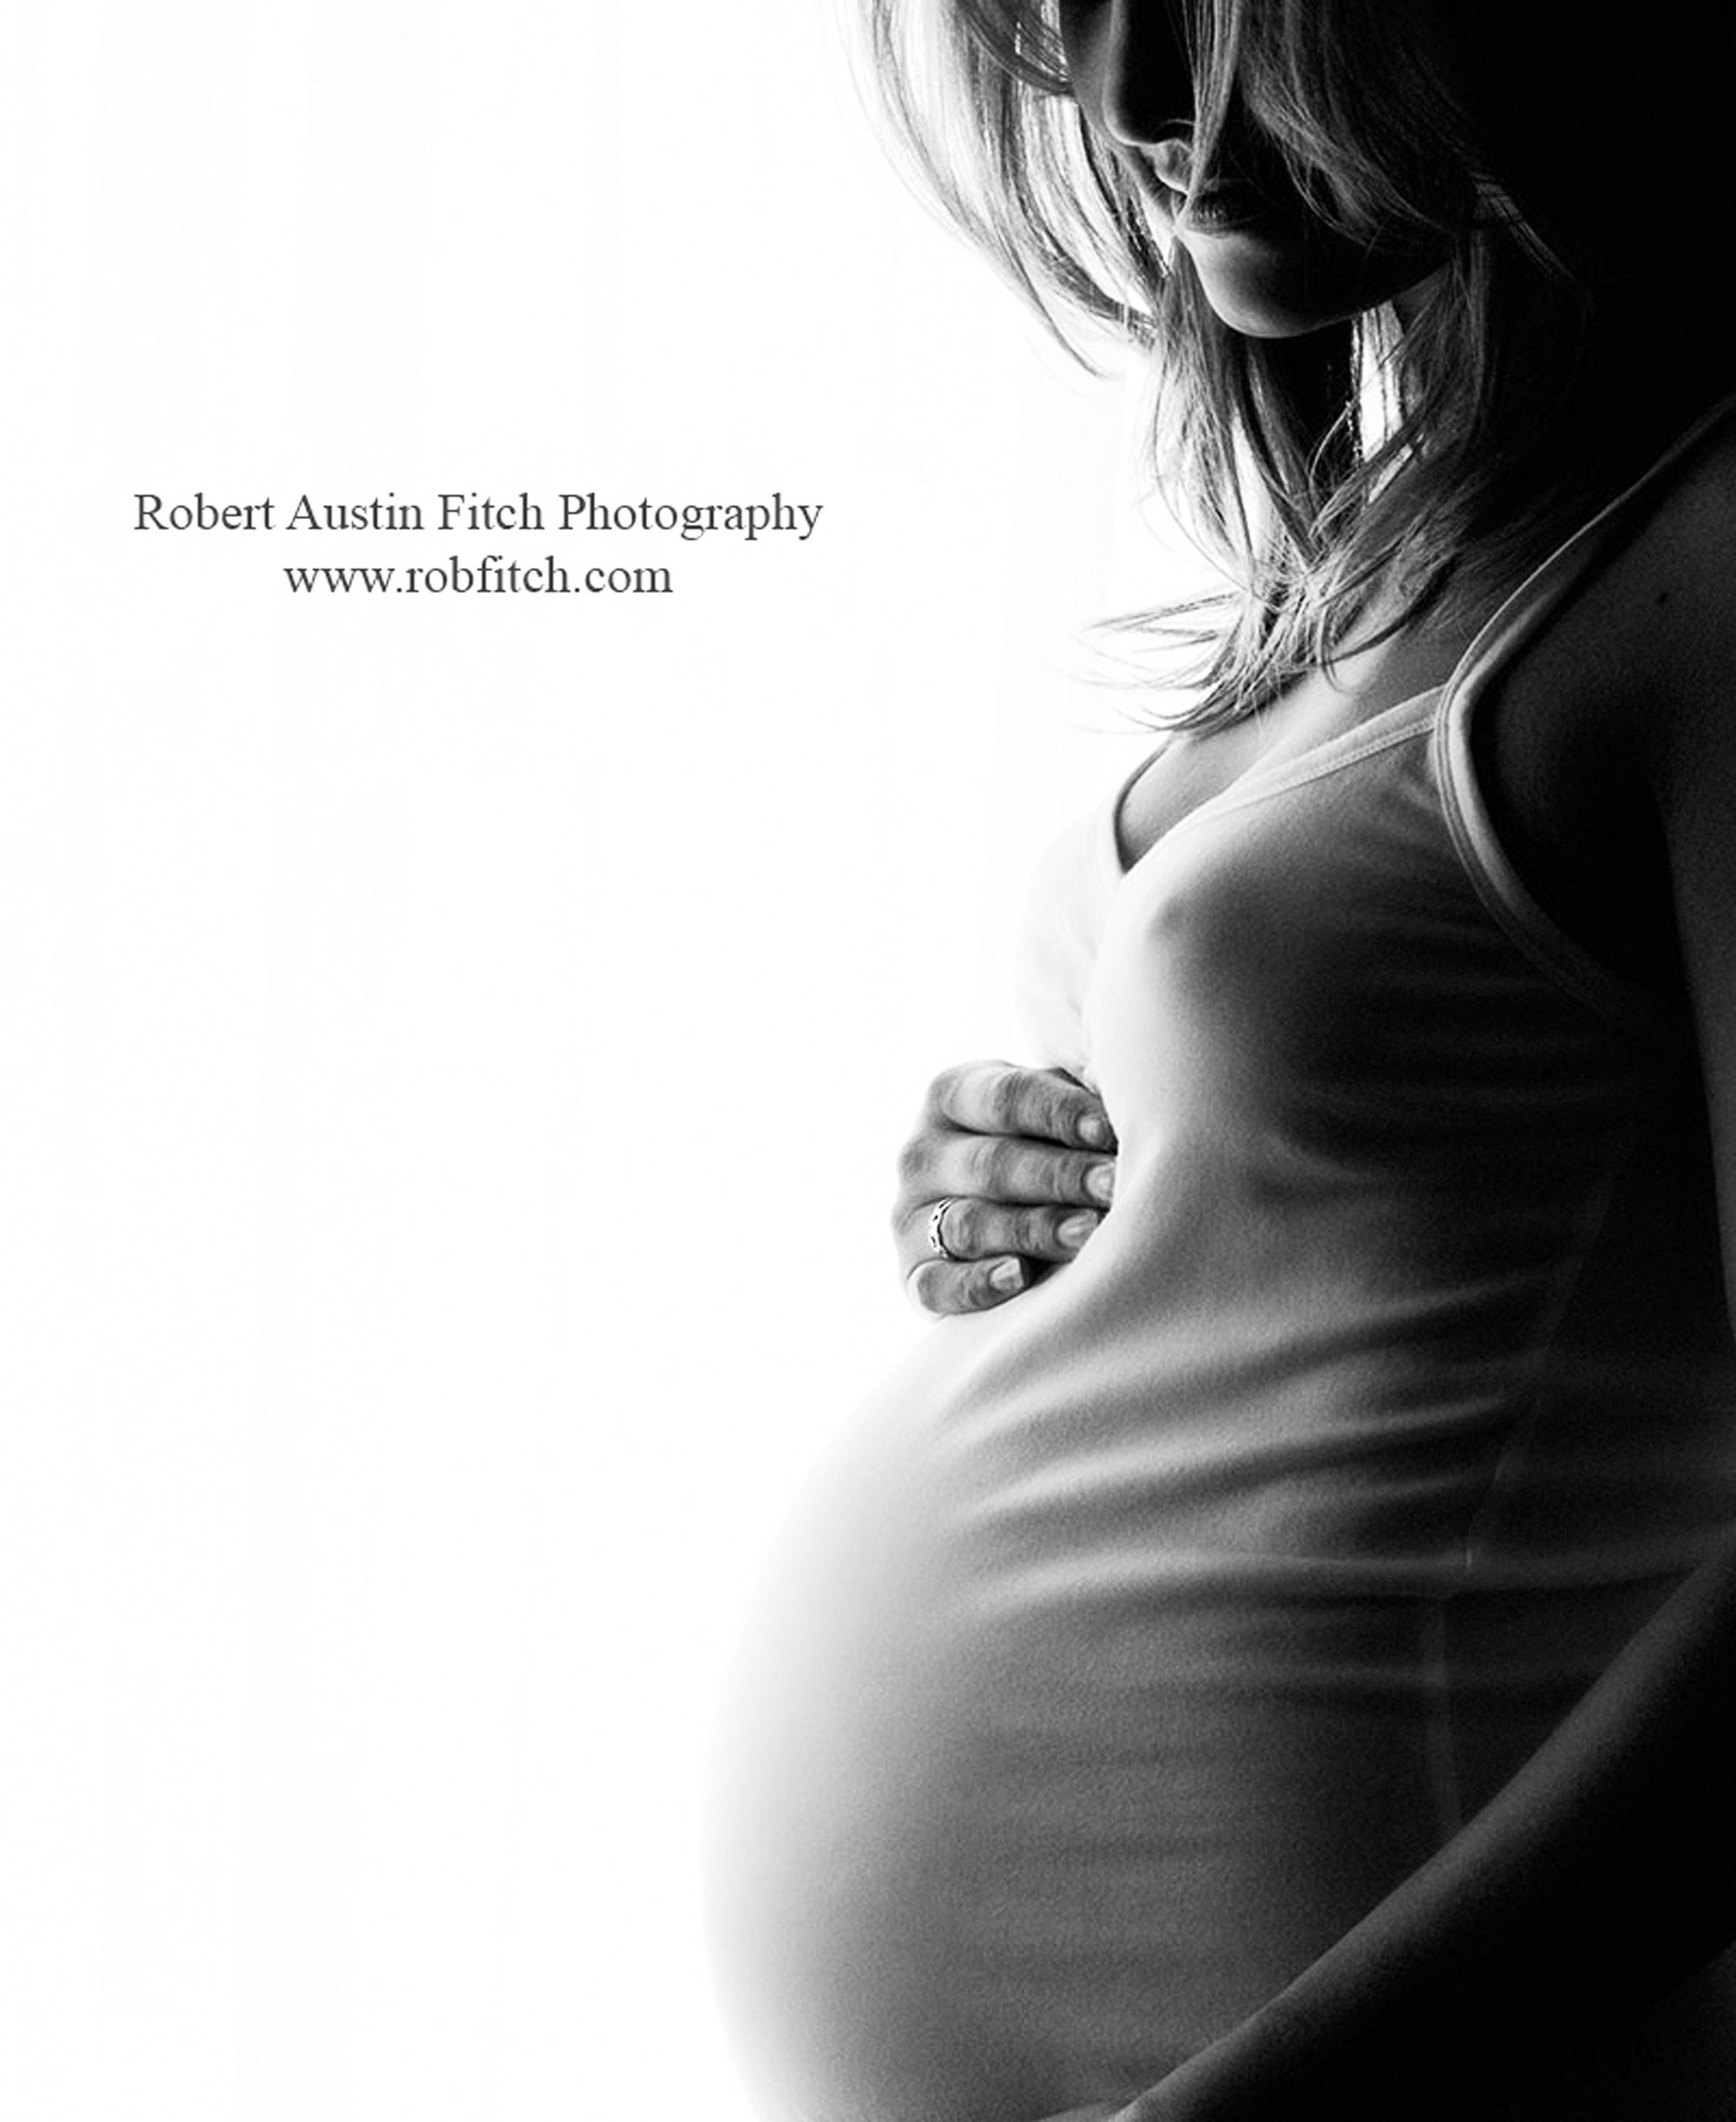 B&W Silhouette Maternity Photo of pregnant woman